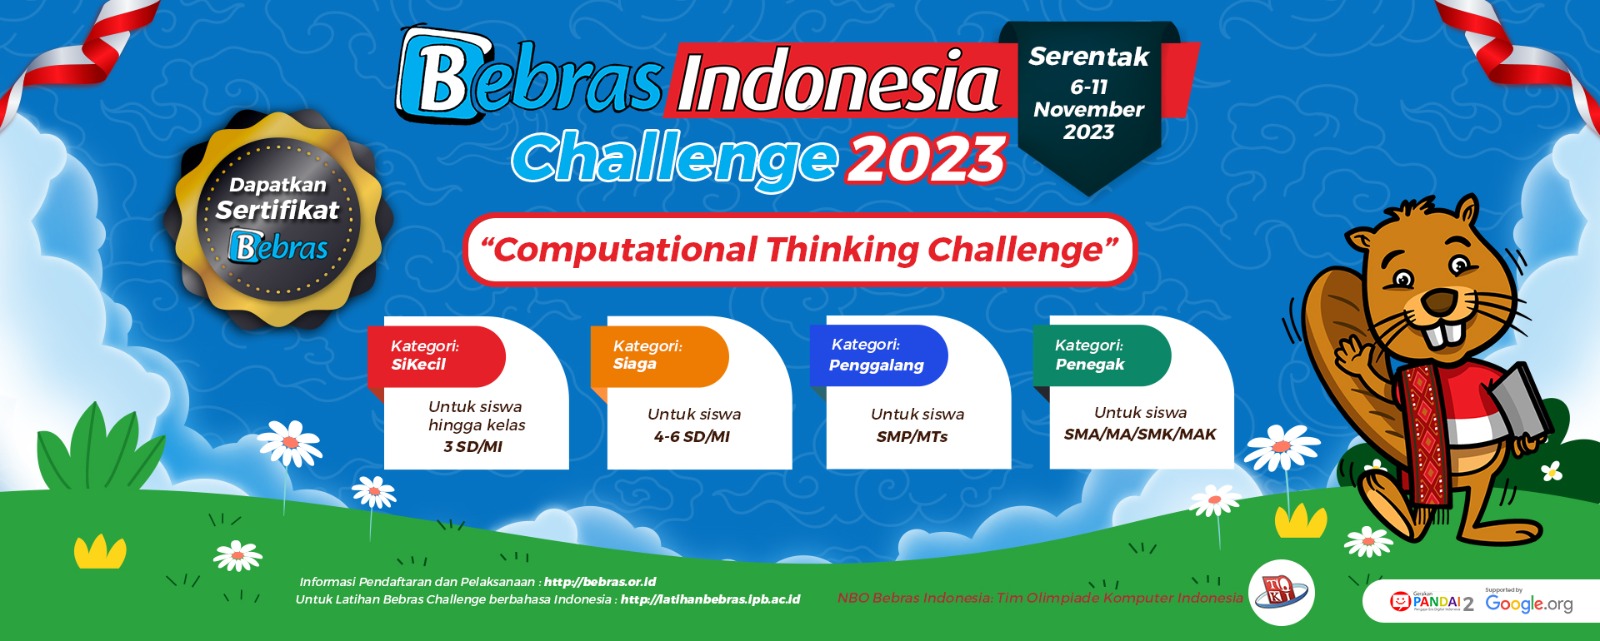 Bebras Indonesia Challenge 2023